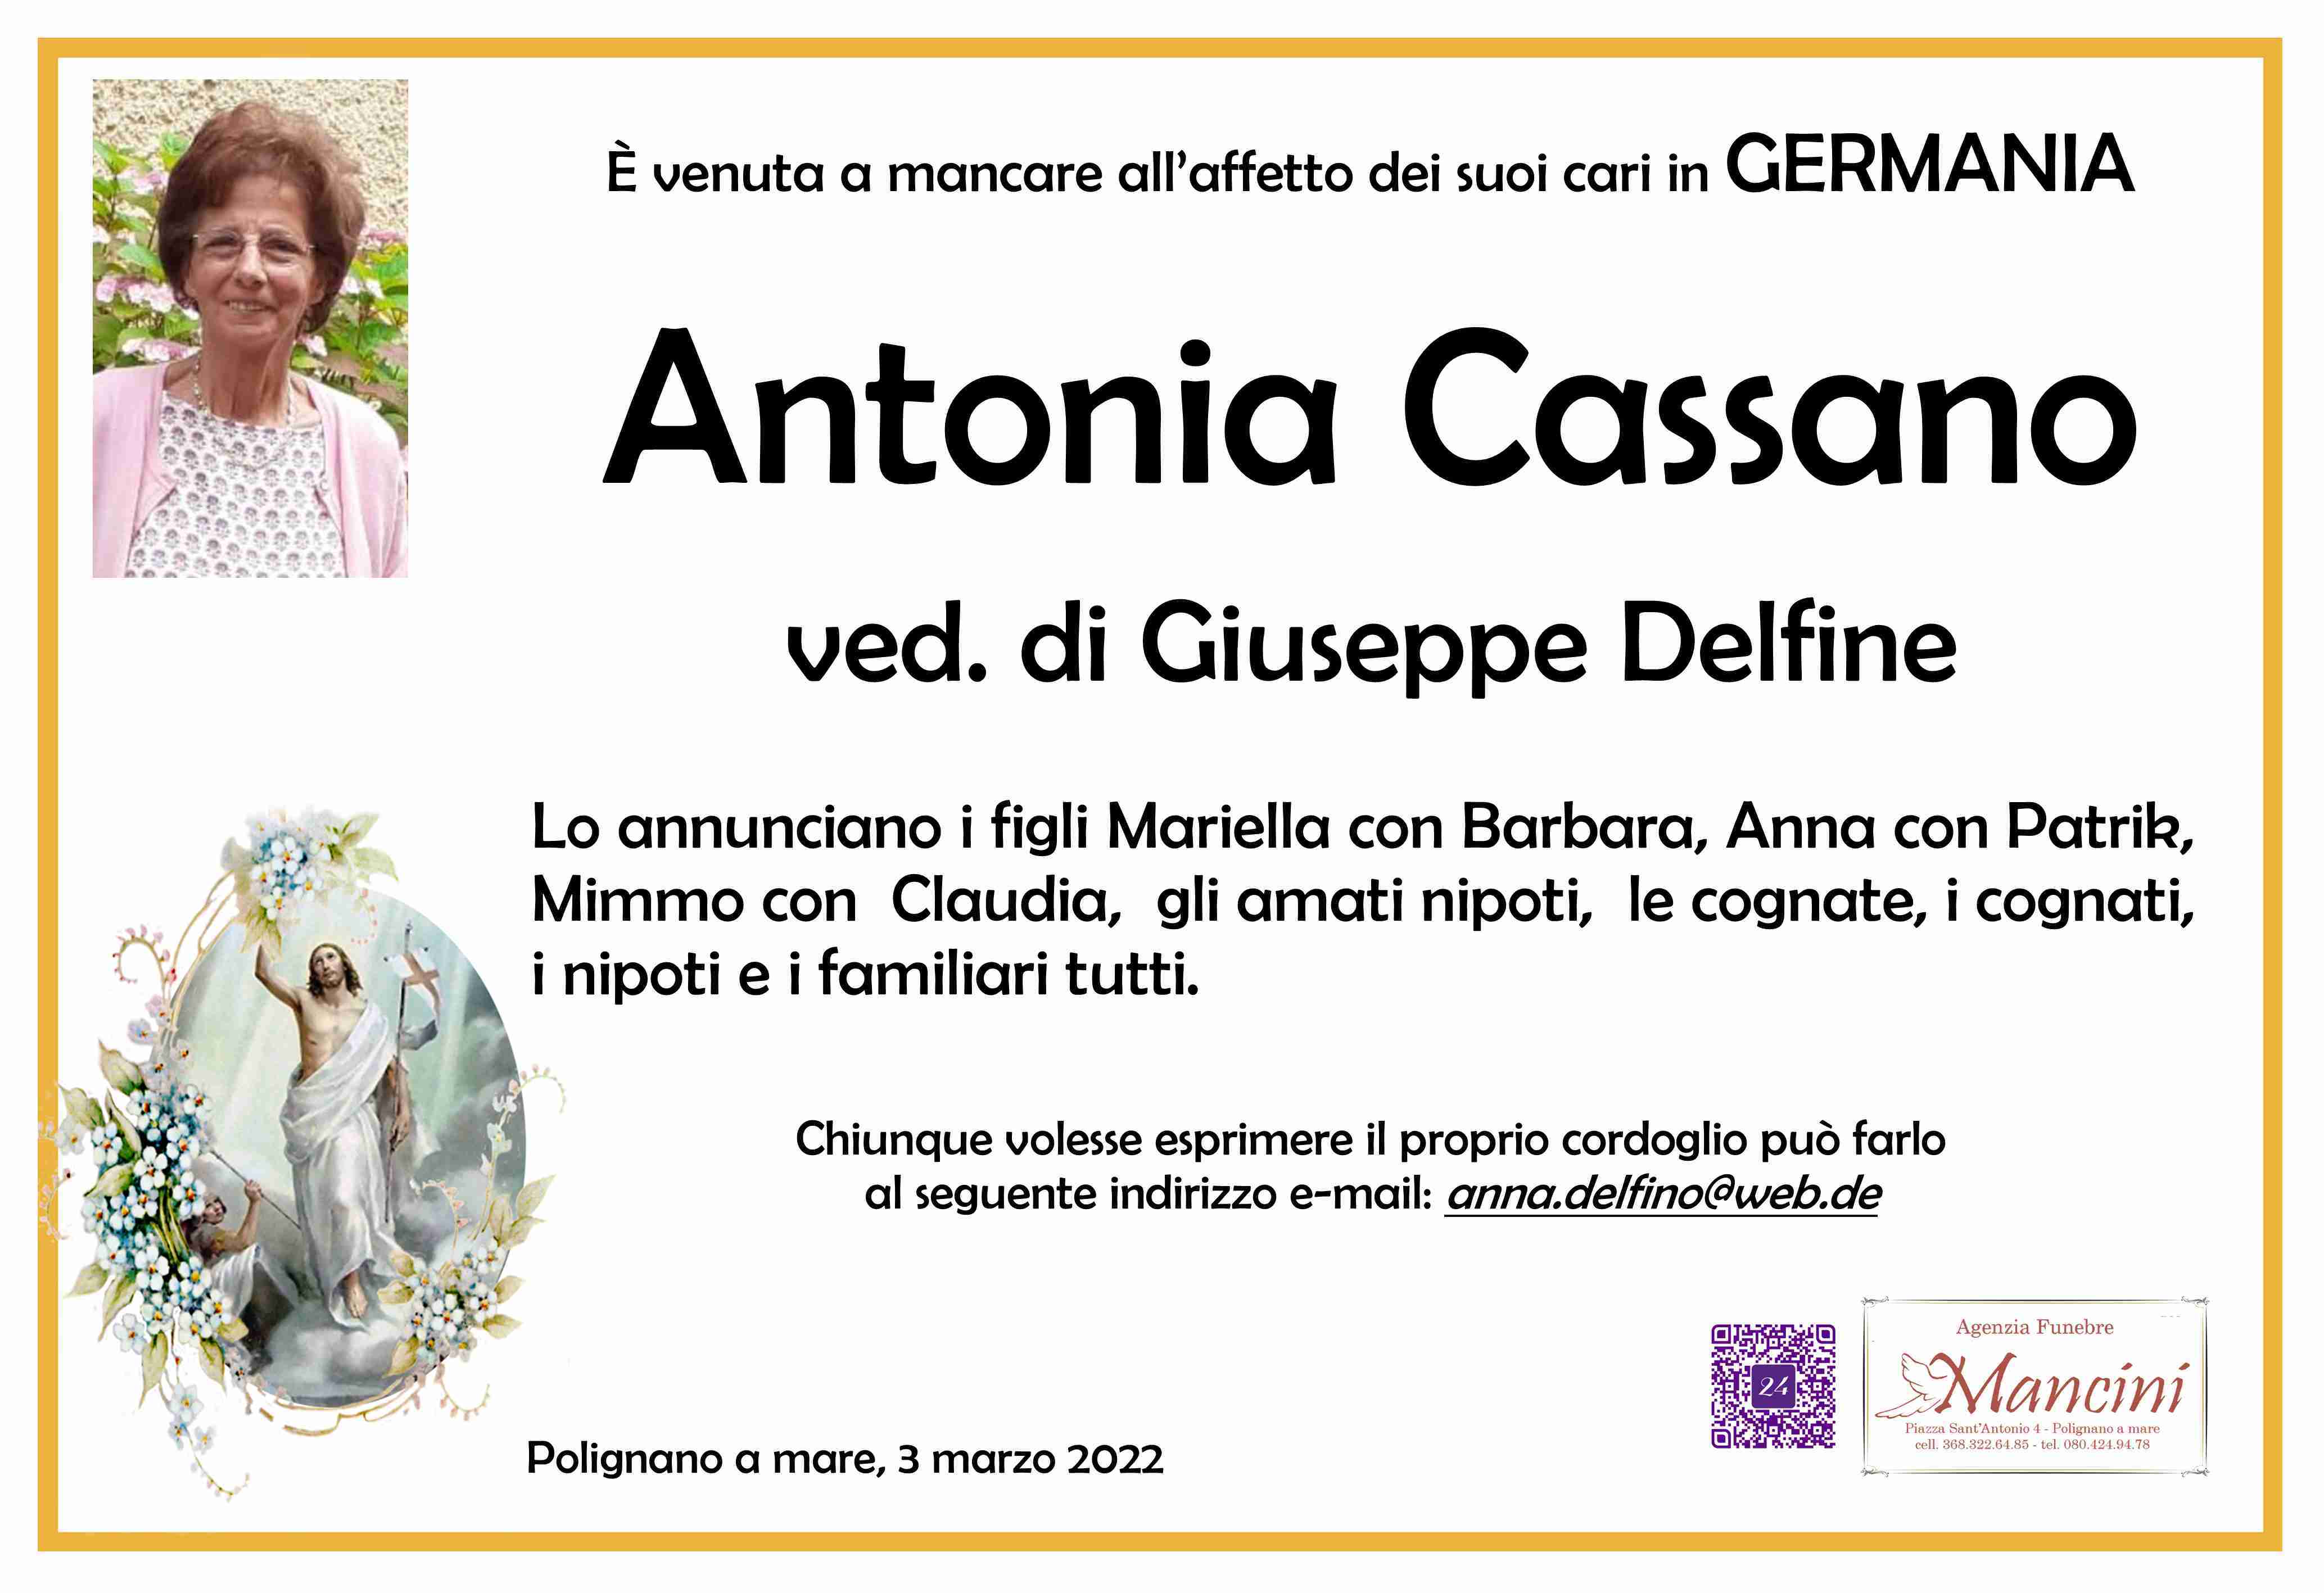 Antonia Cassano